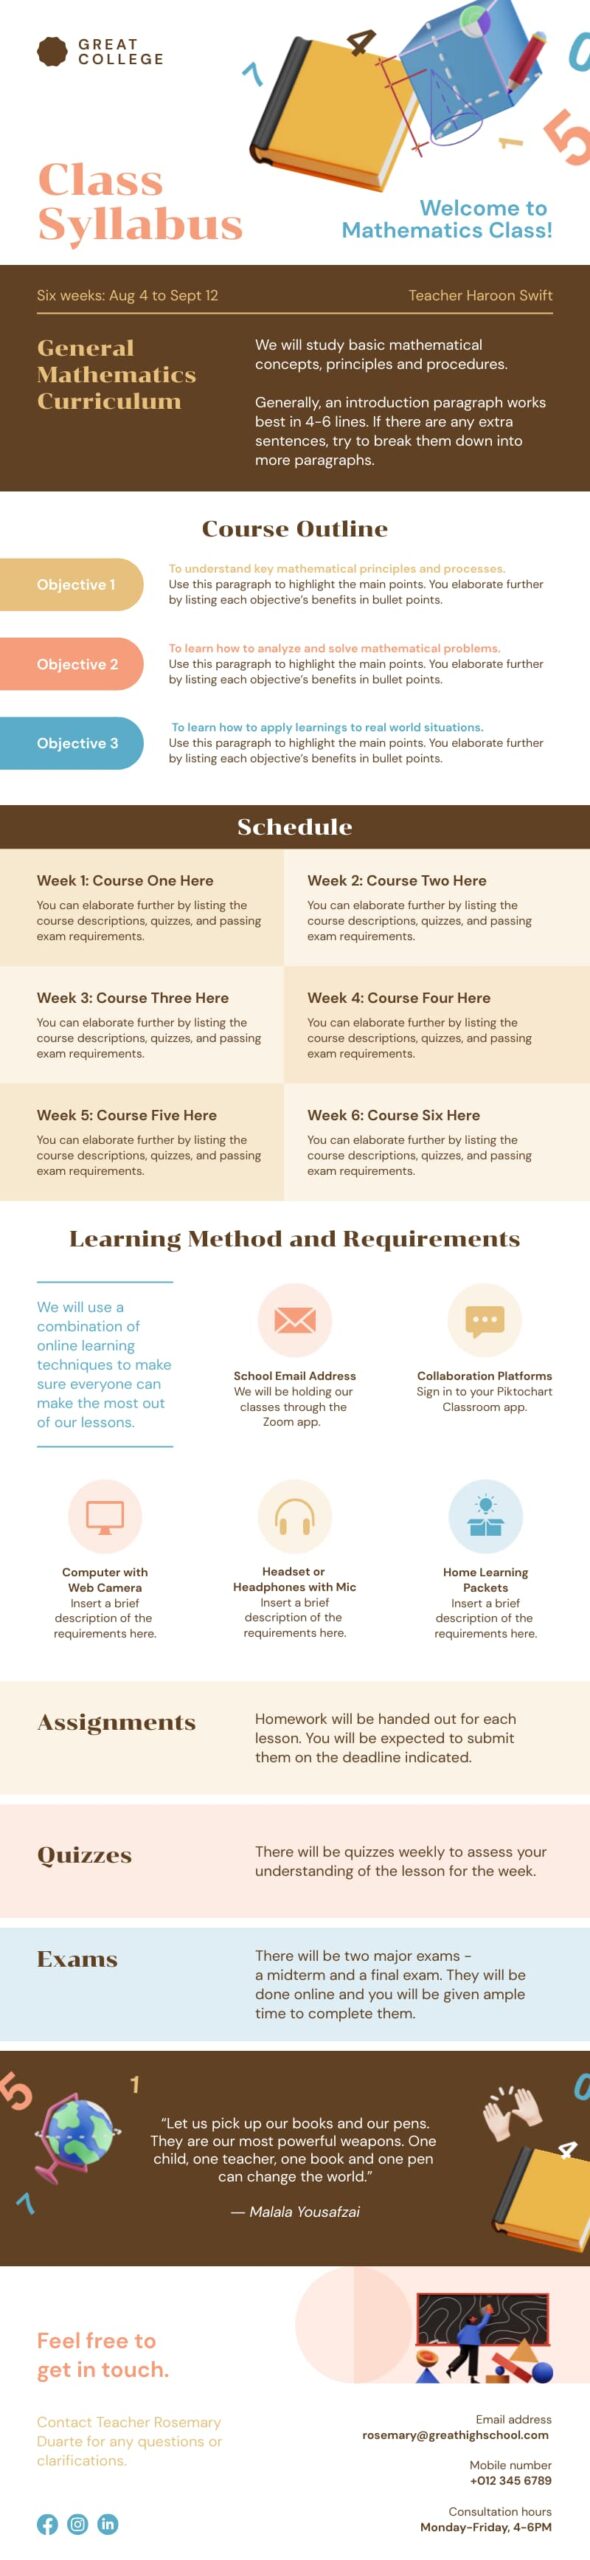 class syllabus infographic template